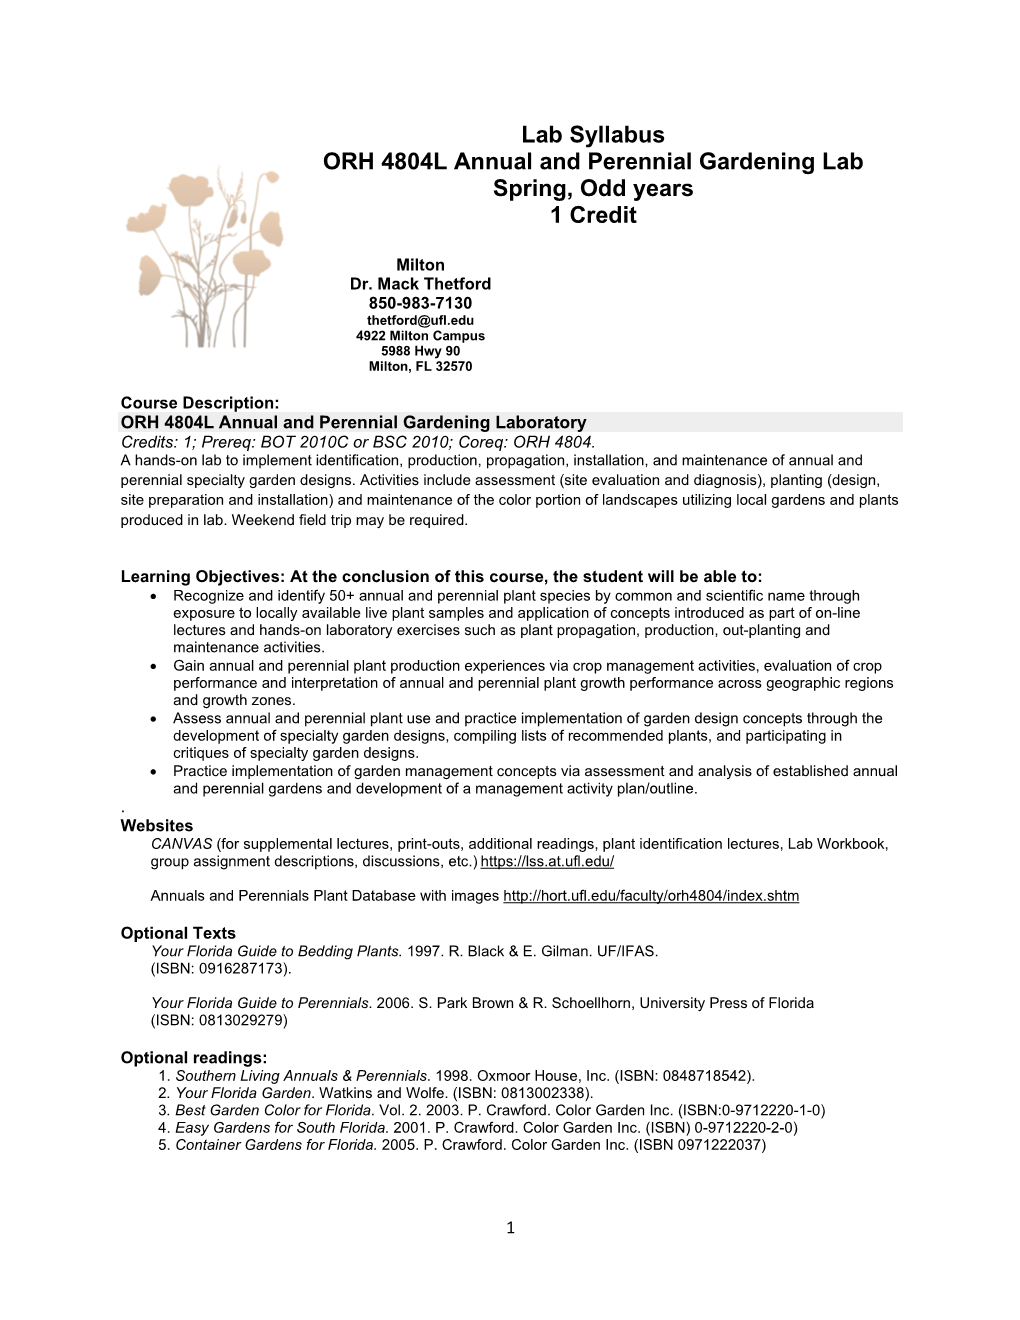 Lab Syllabus ORH 4804L Annual and Perennial Gardening Lab Spring, Odd Years 1 Credit